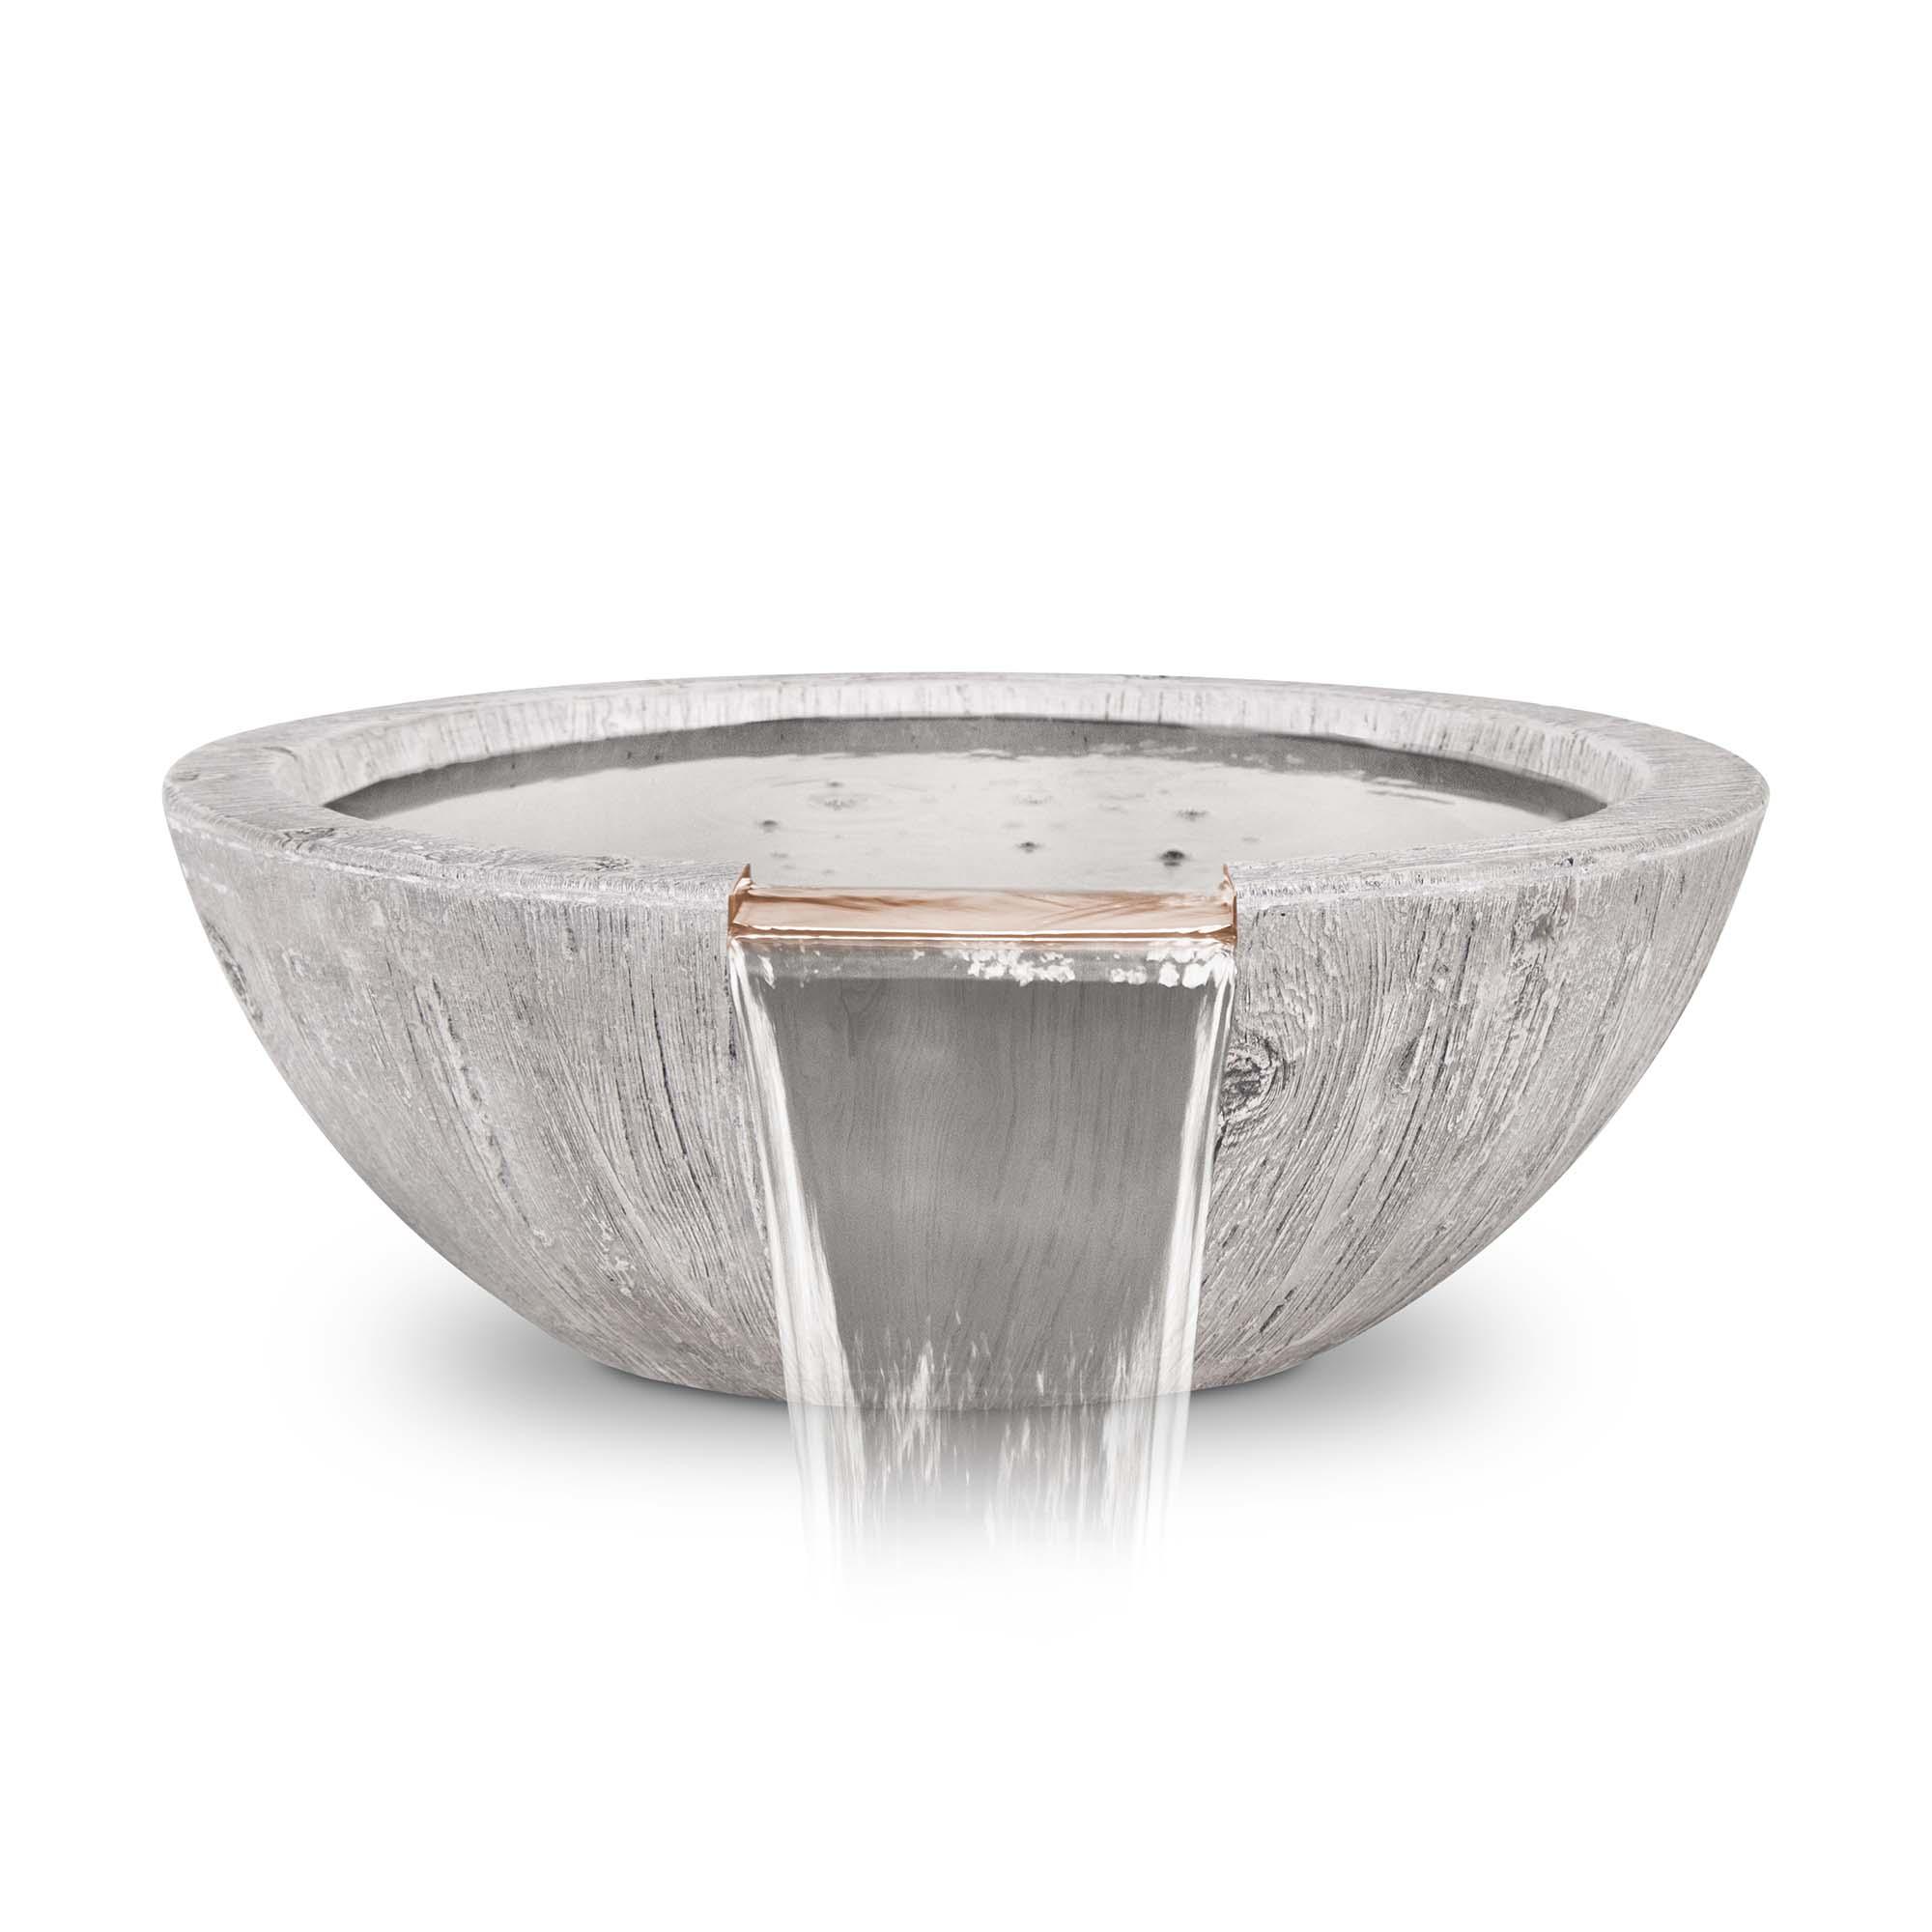 The Outdoor Plus Sedona Water Bowl - Woodgrain Concrete